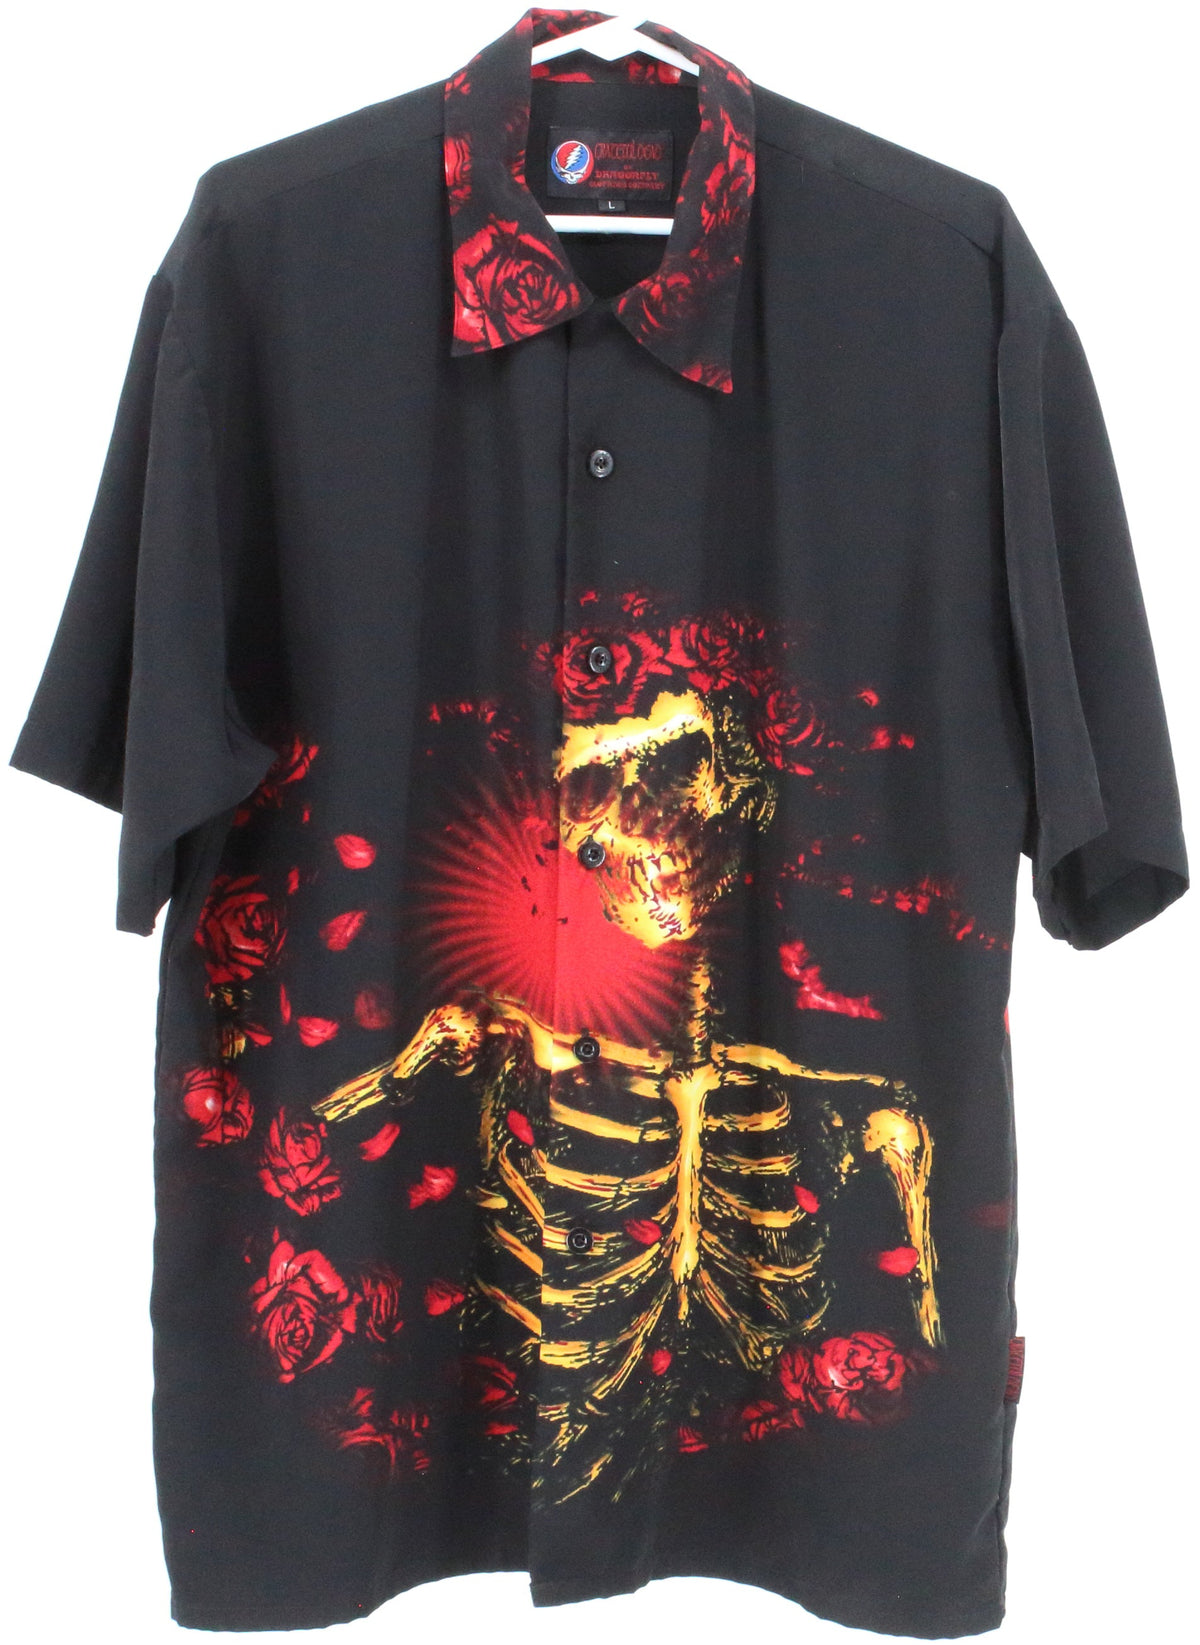 Grateful Dead by Dragonfly Clothing Company Black Skull Print Short Sleeve Shirt